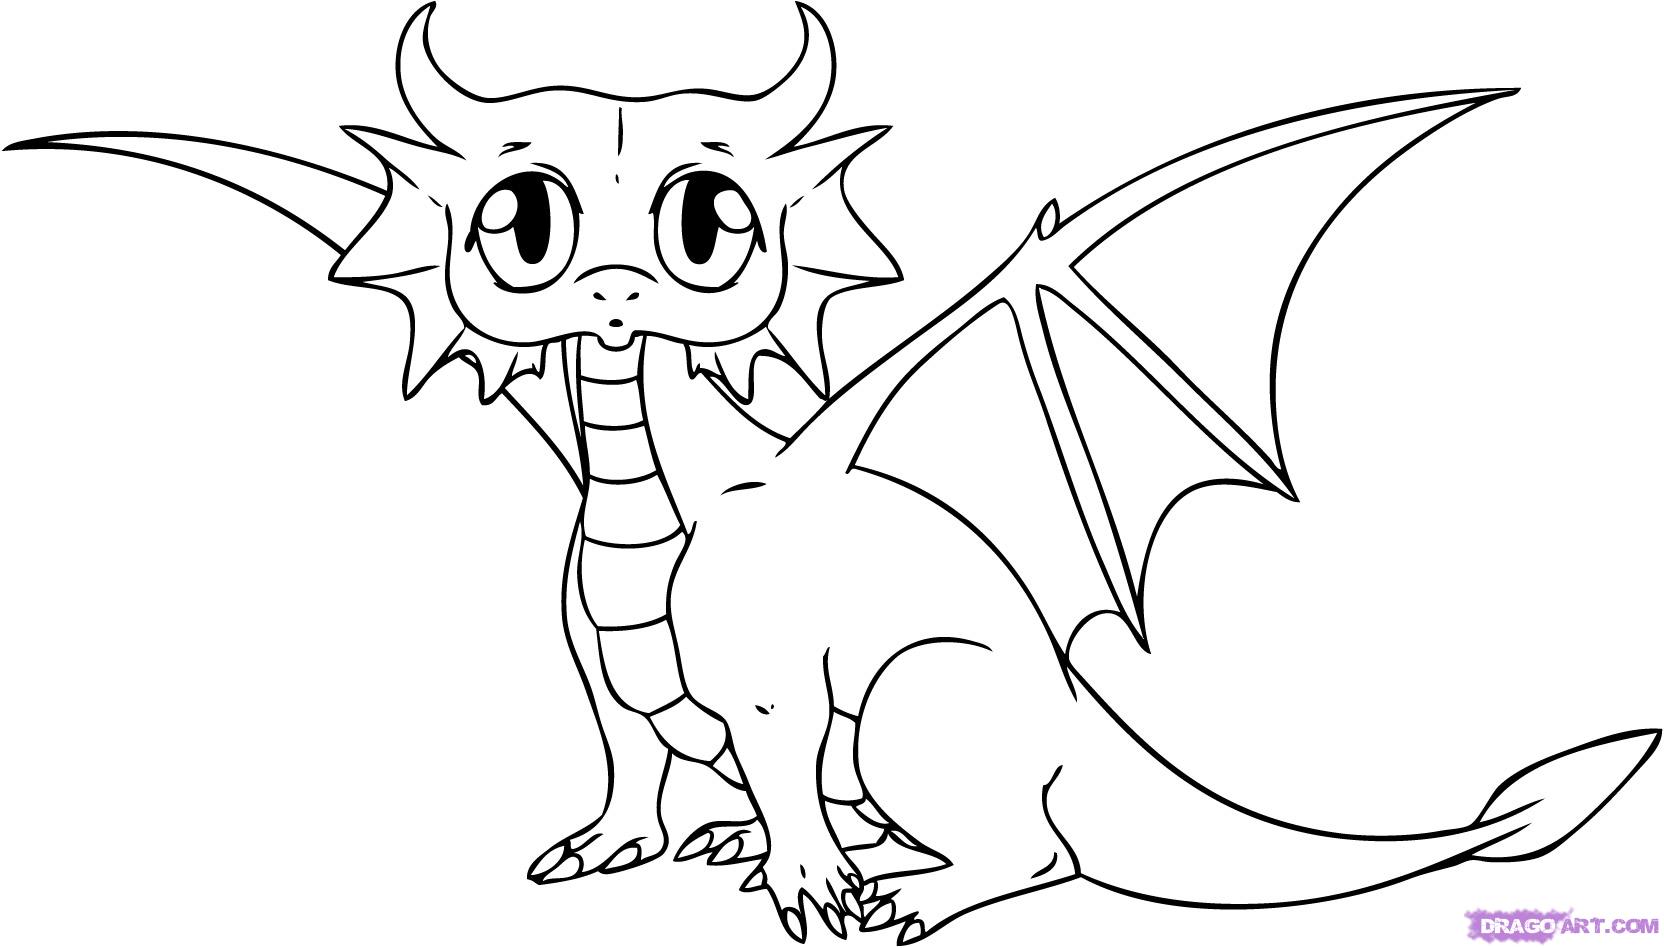 How to Draw a Cartoon Dragon, Step by Step, Dragons, Draw a Dragon ...